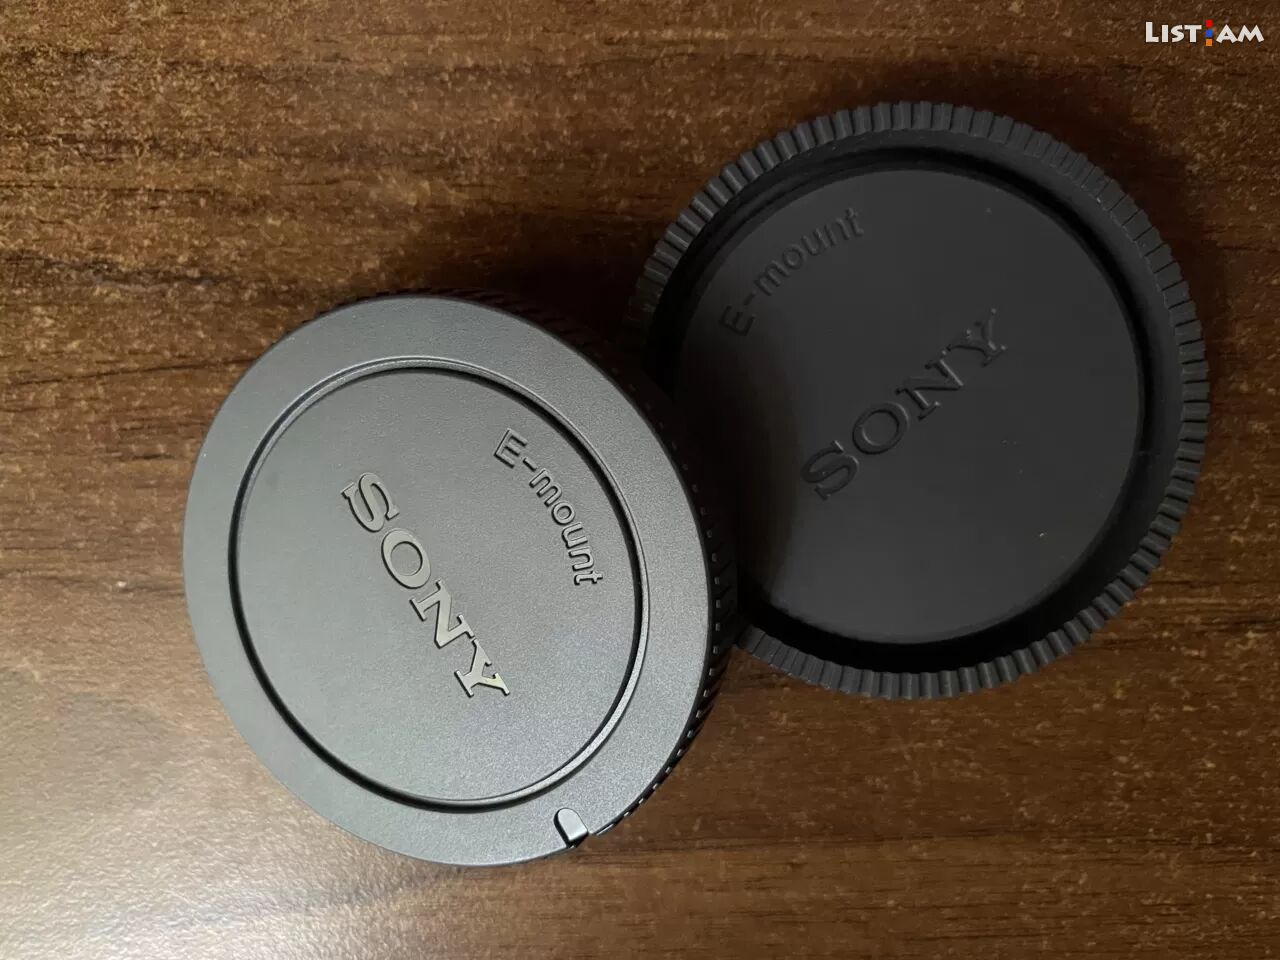 Sony aparati